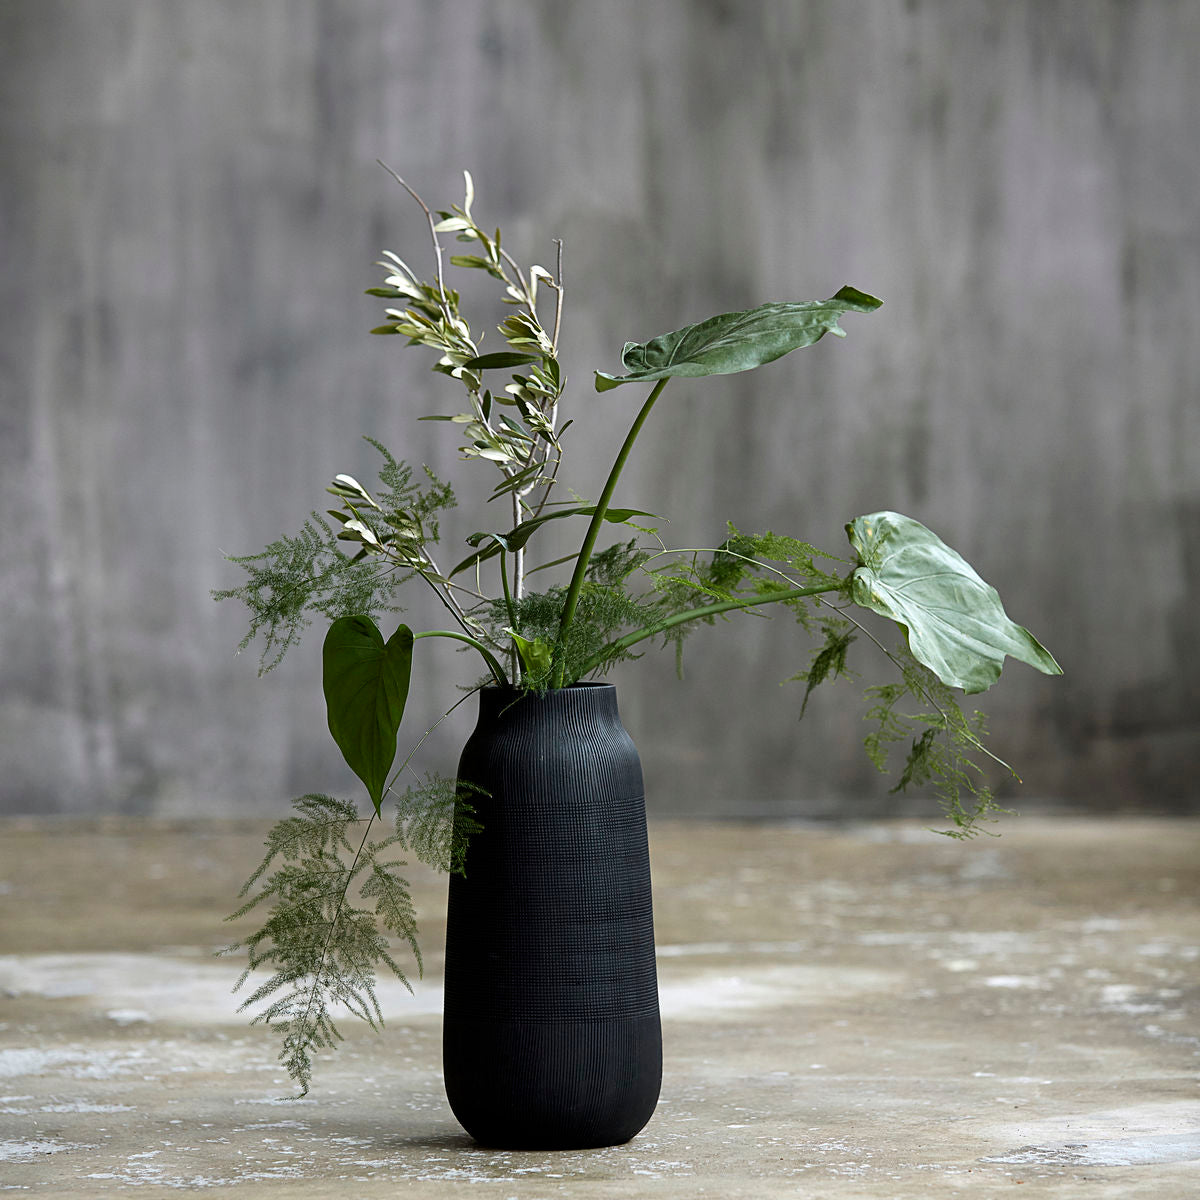 House Doctor Vase, Groove, Black 35cm